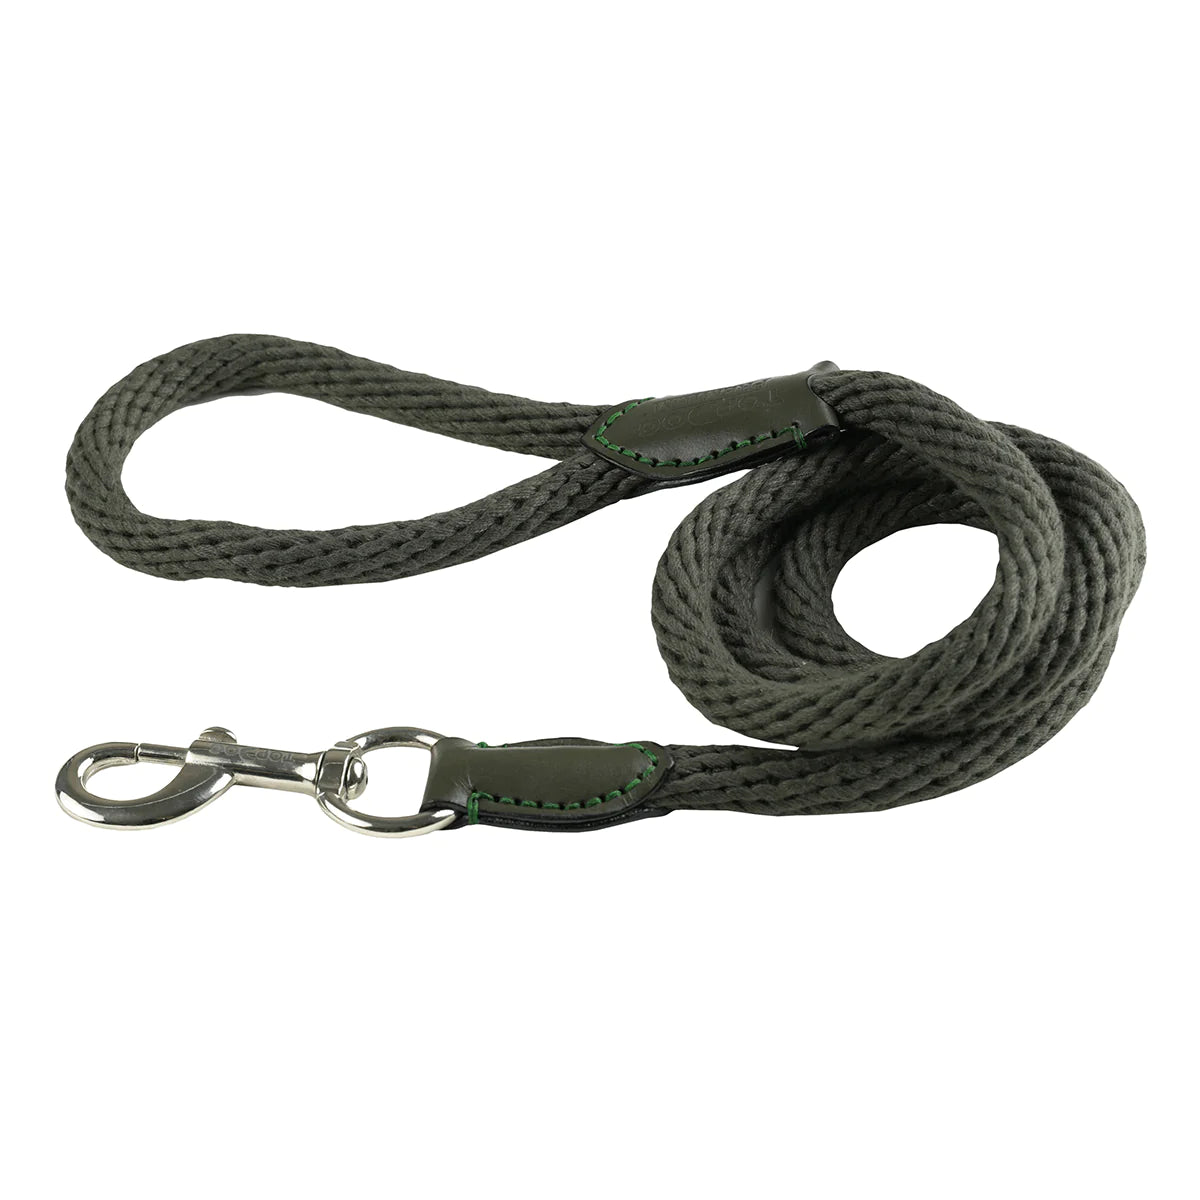 TOPDOG PREMIUM Cotton Rope Leash - Olive, Large